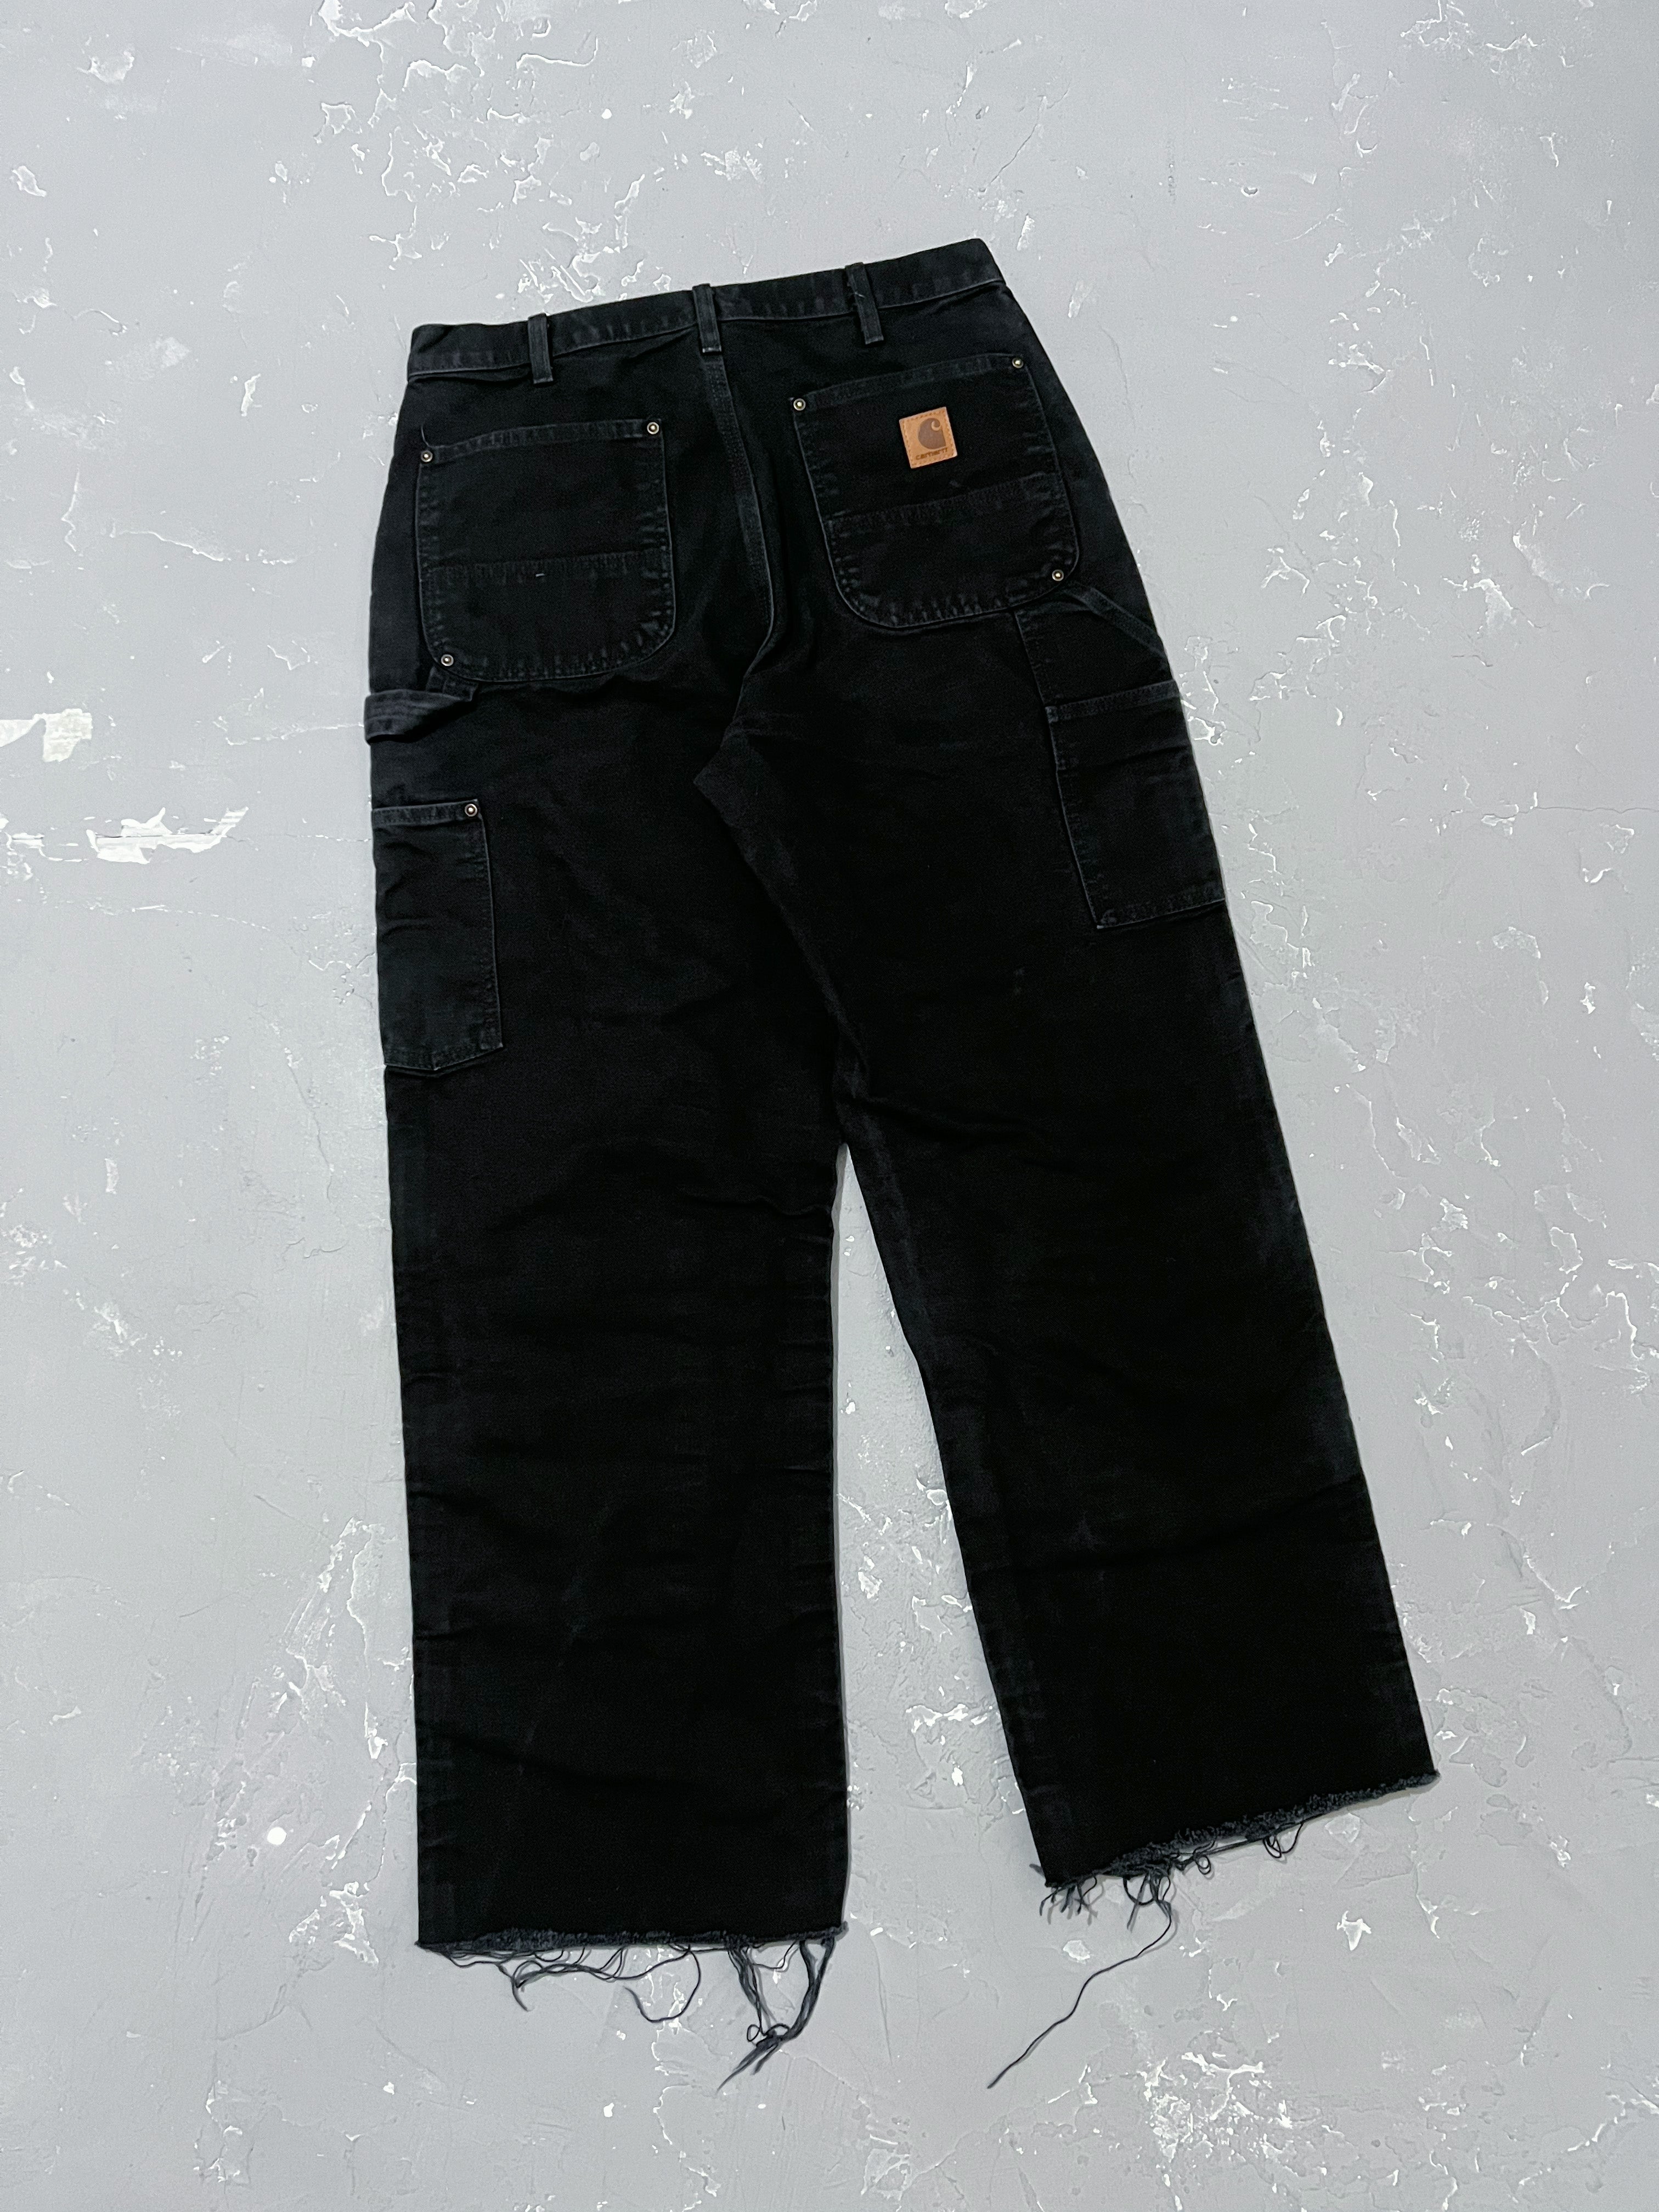 Carhartt Black Double Knee Pants [32 x 30]